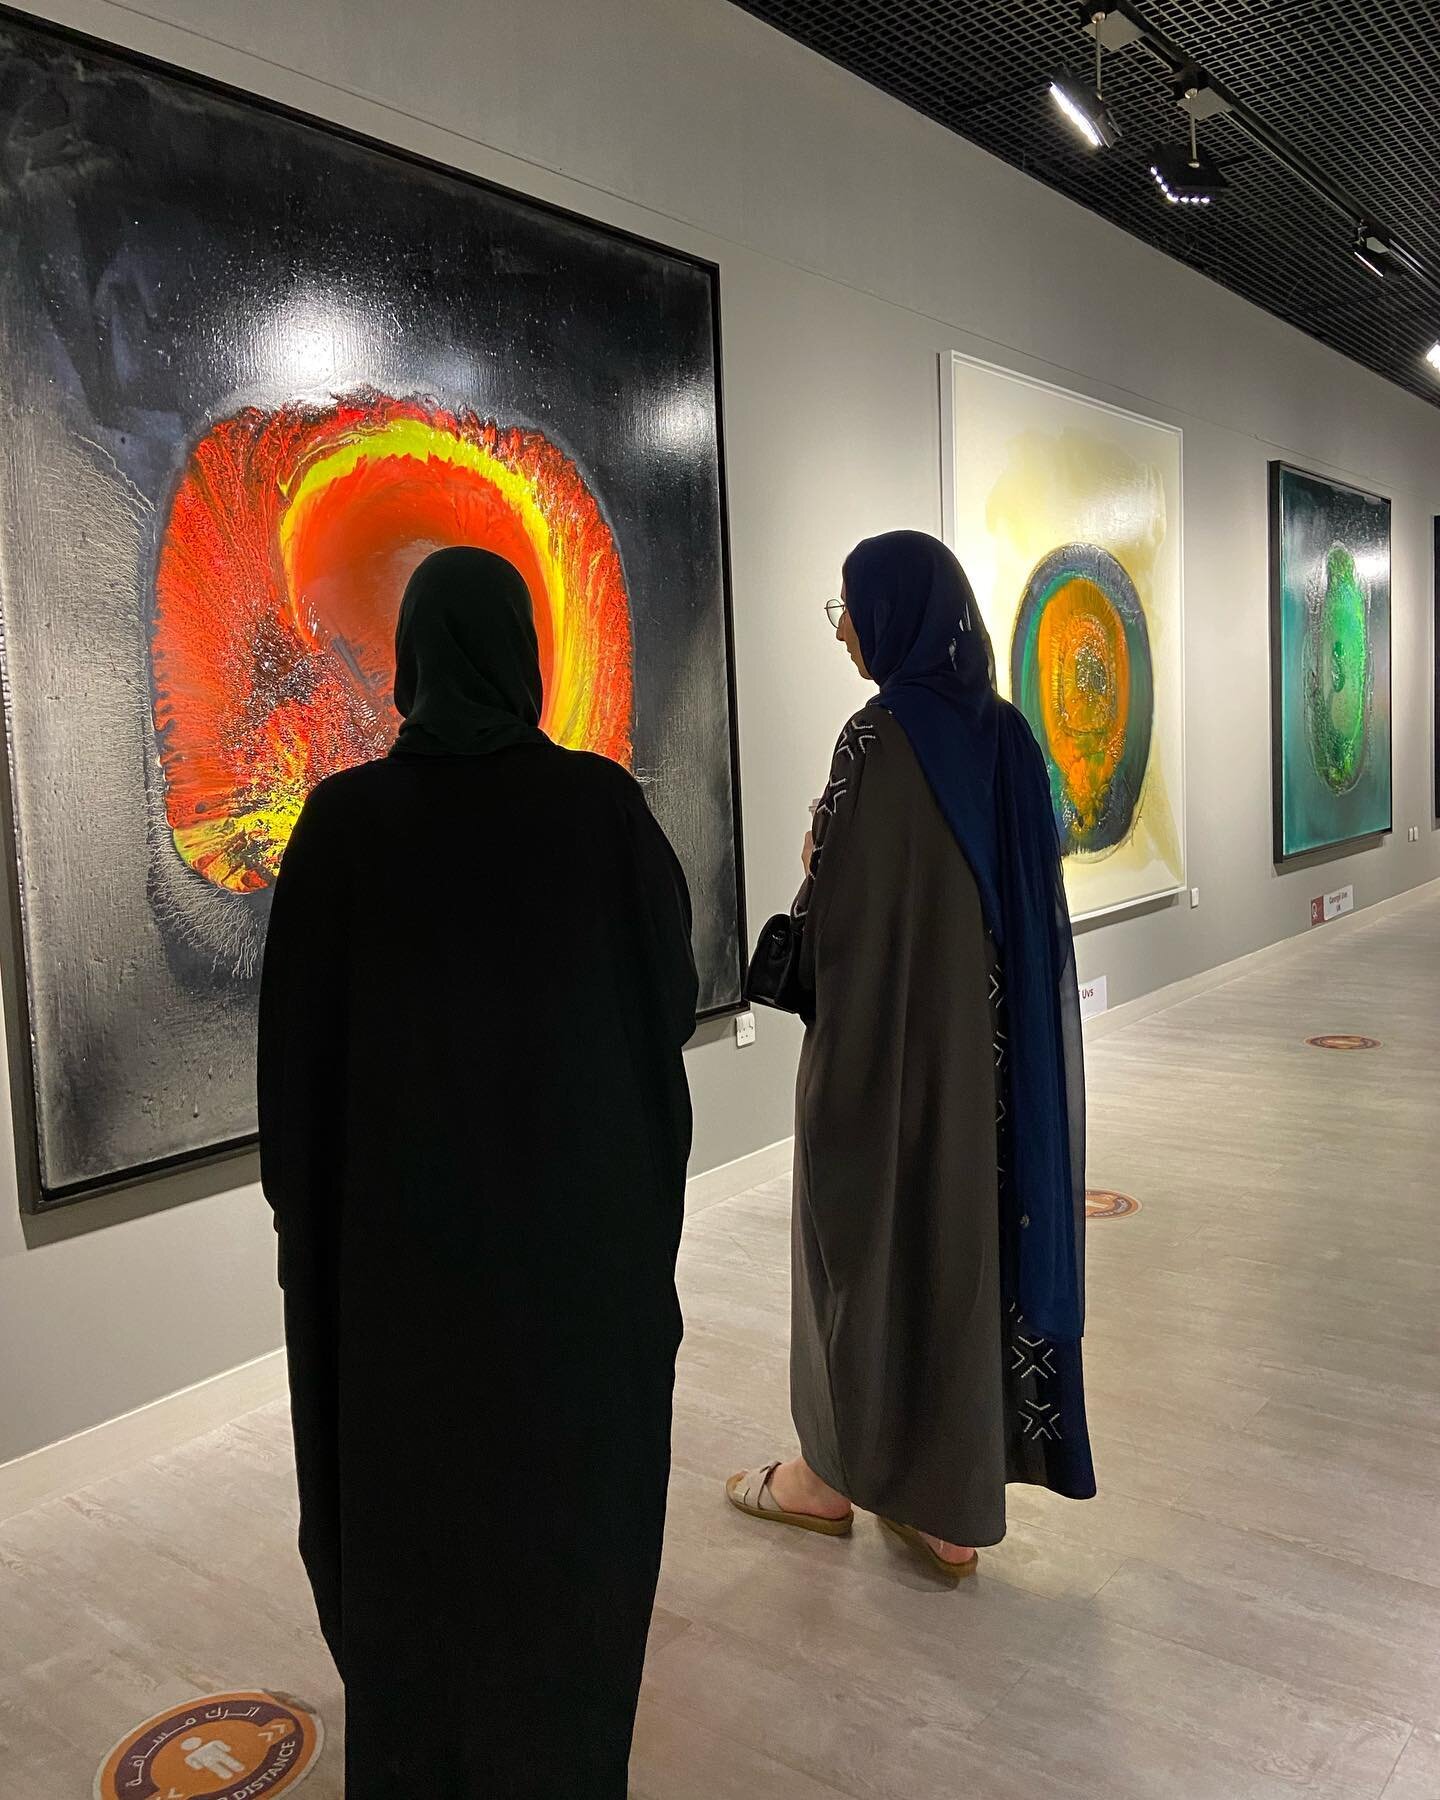 THE 4TH EDITION OF THE QATAR INTERNATIONAL ART FESTIVAL IN DOHA. 

25 - 30TH SEPTEMBER 2022.

Over 500 artist from 70 countries.

#qiaf2022 #artfestival #Qatar2022 #roadto22 #mapsQatar #Qatar #Doha #GulfTimes #qiaf #internationalartfestival #qatarint